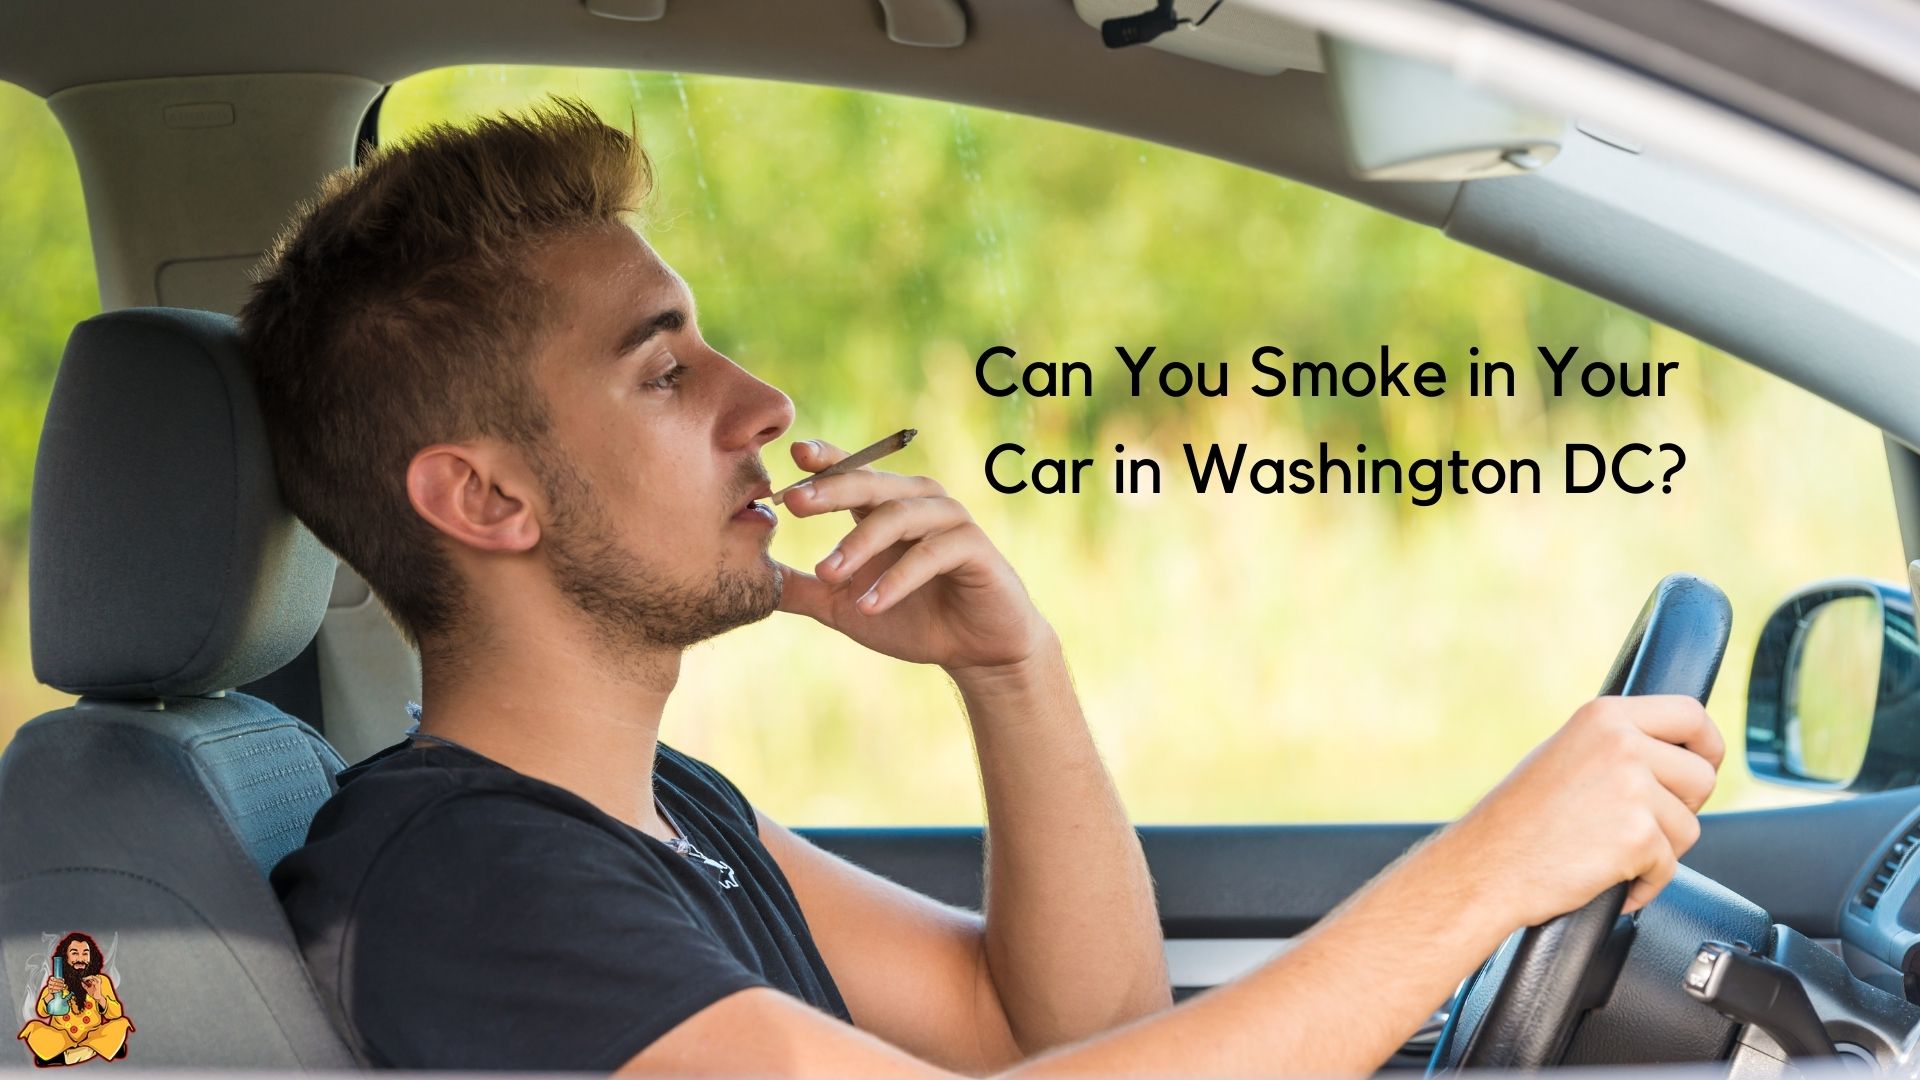 Can You Smoke in a Car in Washington, DC?